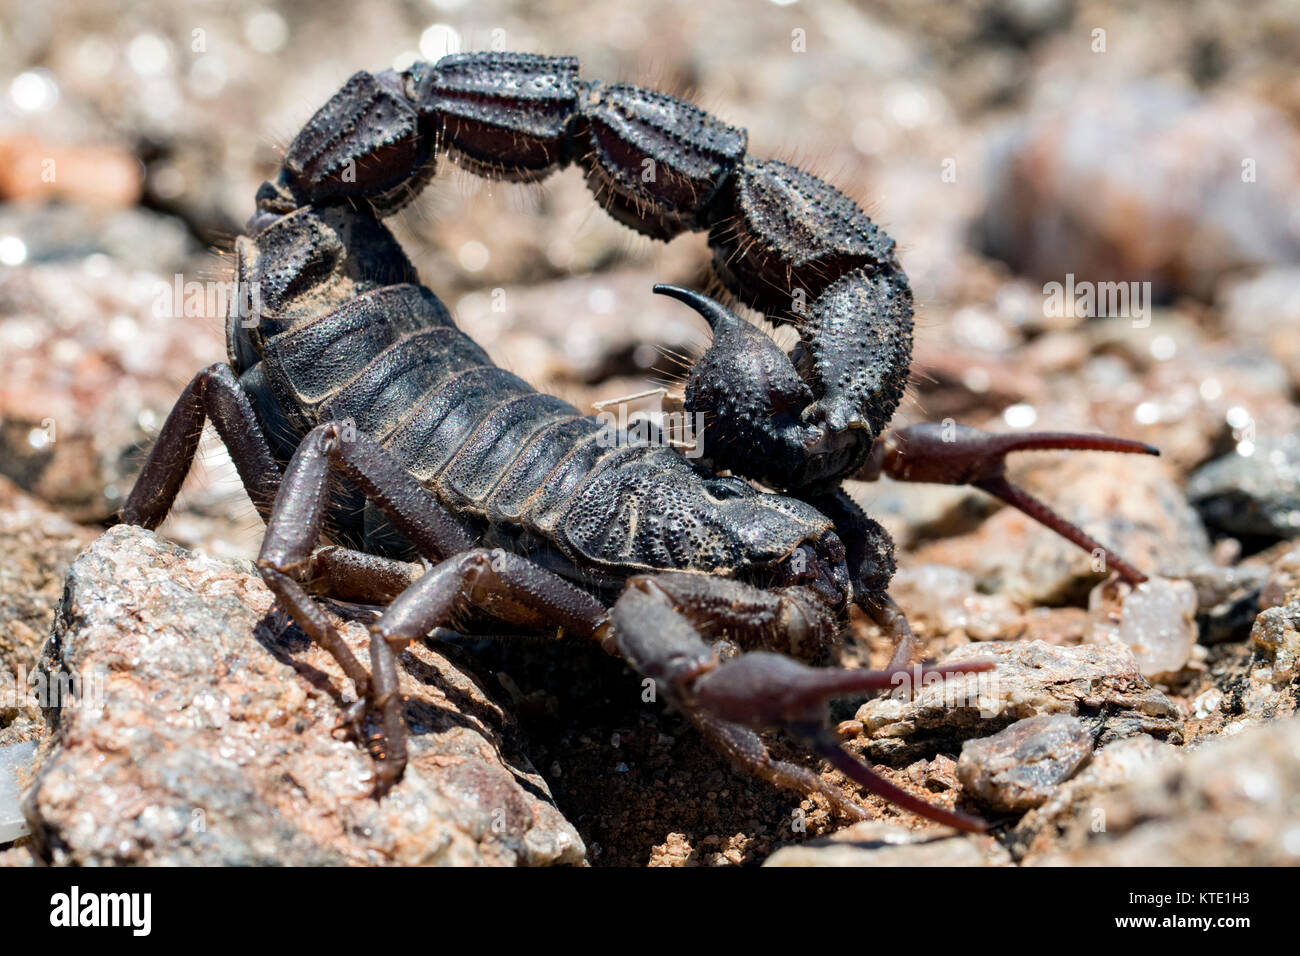 Close-up of venomous Scorpion (Parabuthus sp.) - Huab Conservancy, Damaraland, Namibia, Africa Stock Photo